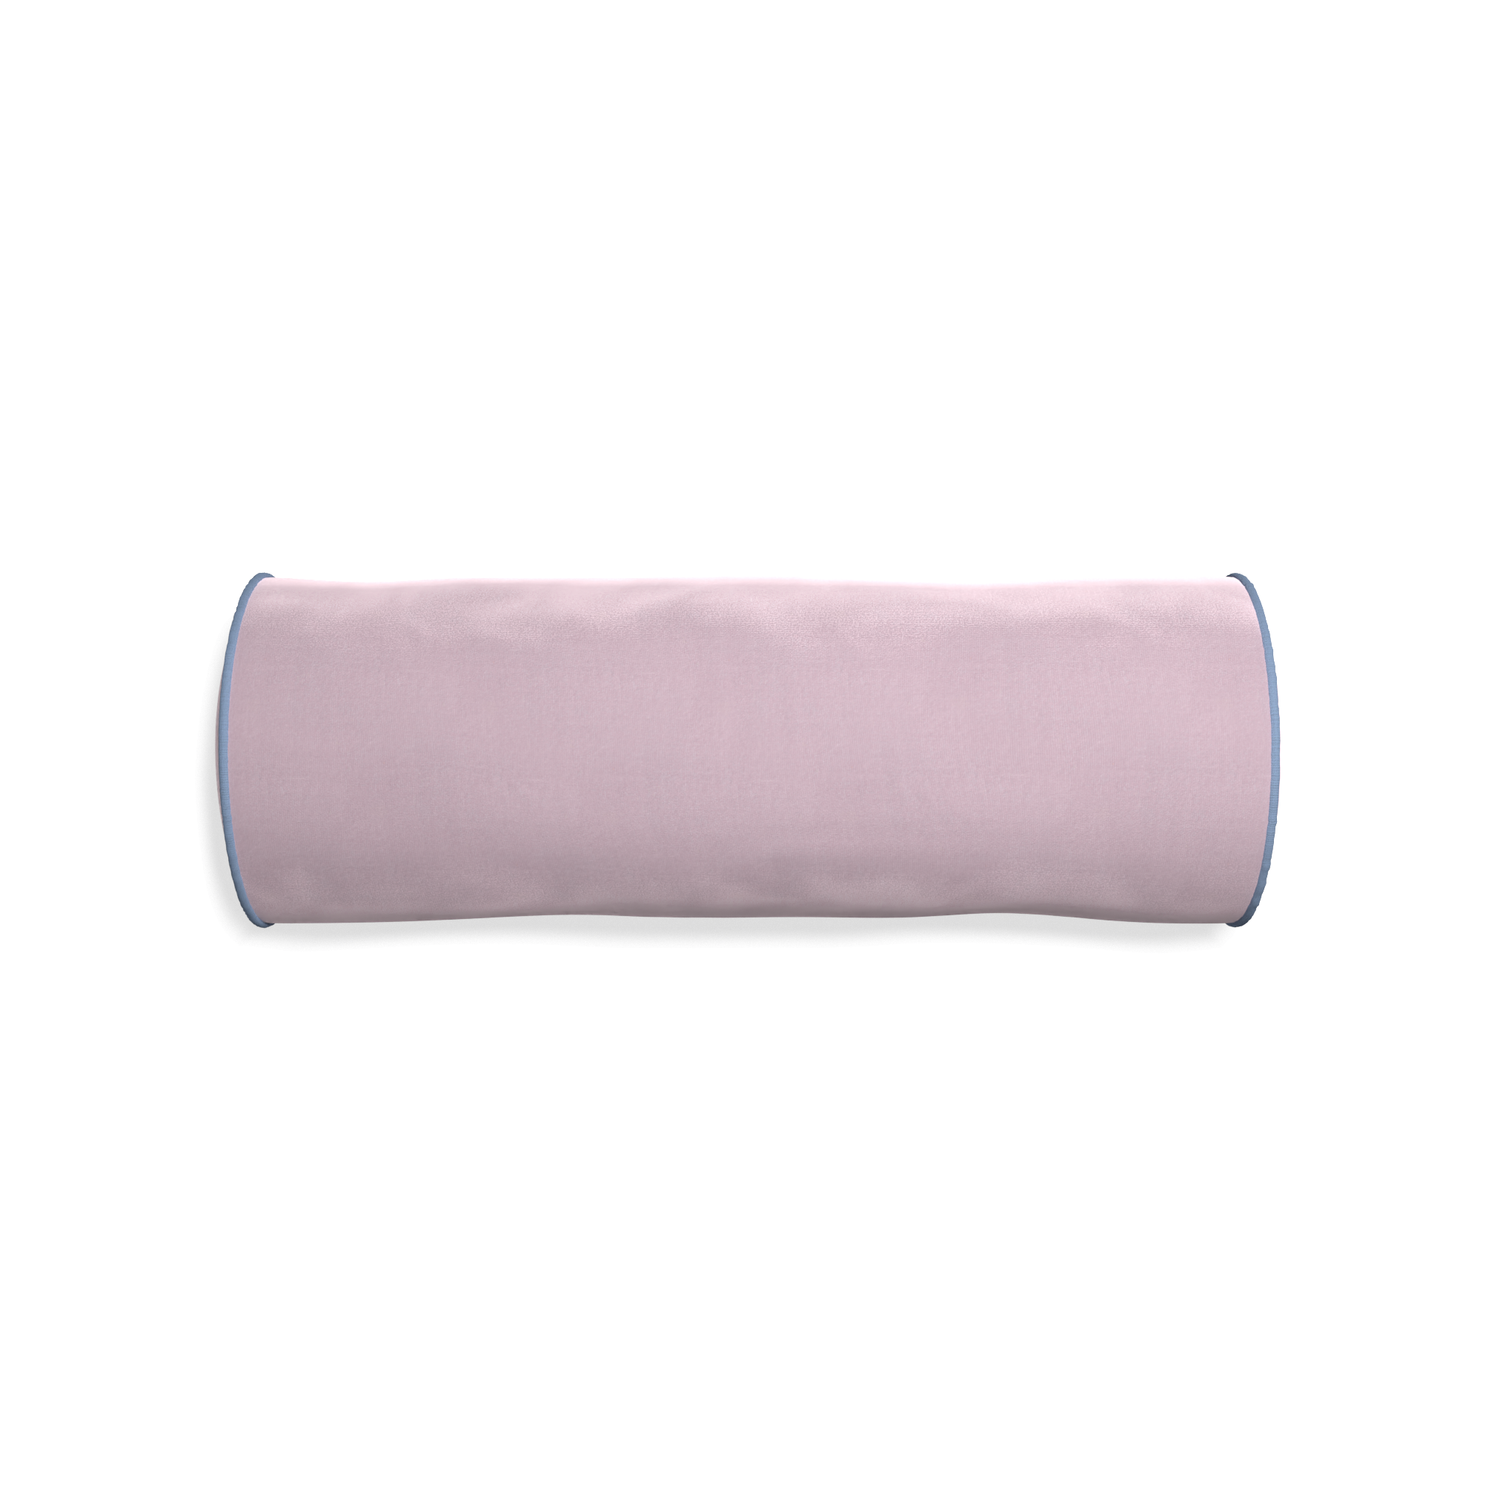 Bolster lilac velvet custom pillow with sky piping on white background